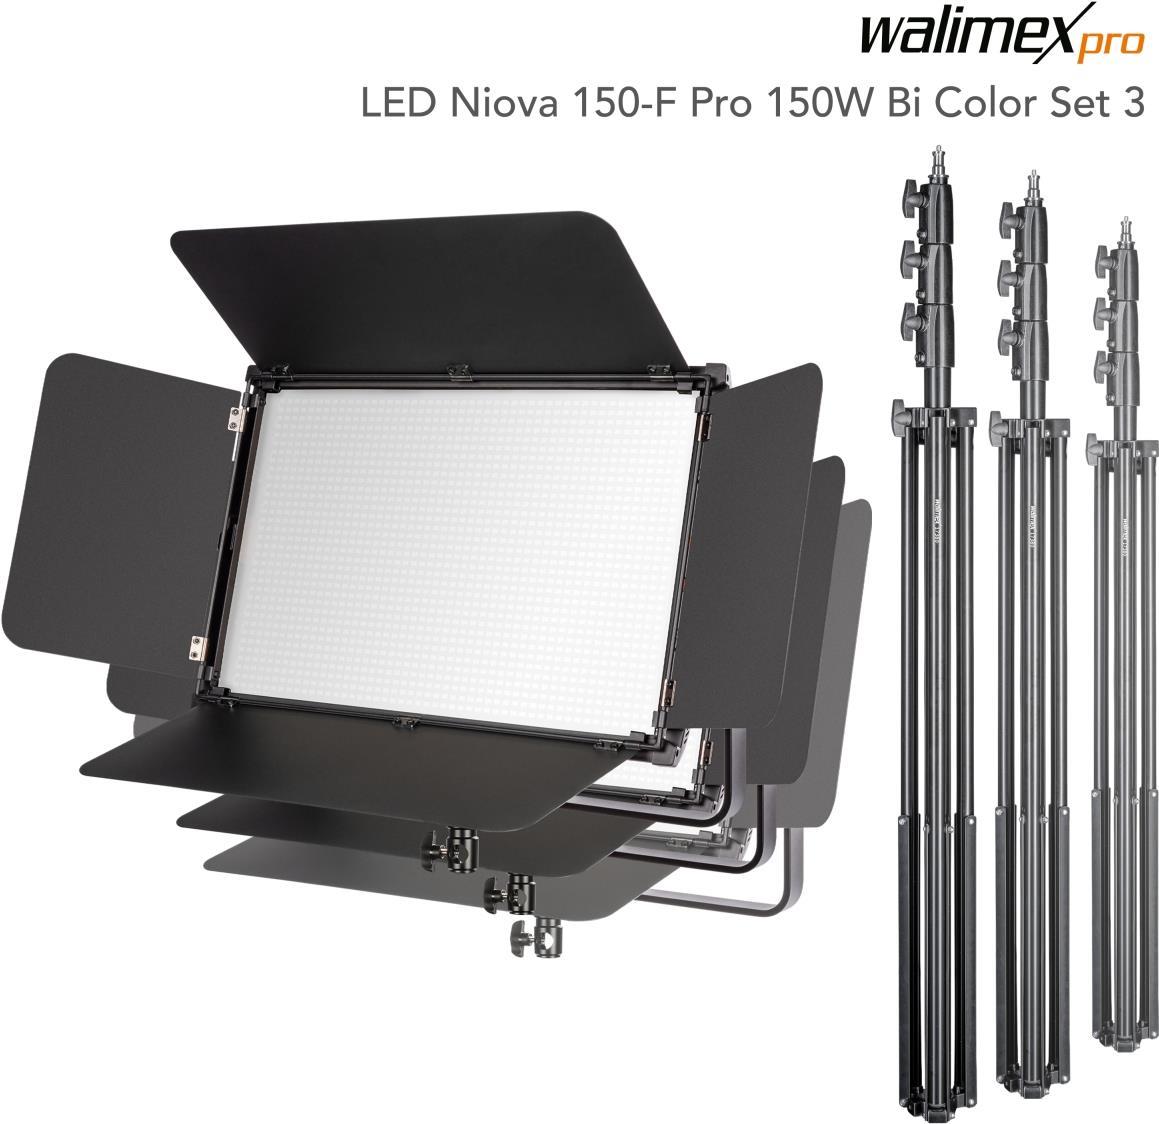 Walimex pro LED Niova 150-F Pro 150W Bi Color Set3 (23222) von Mantona